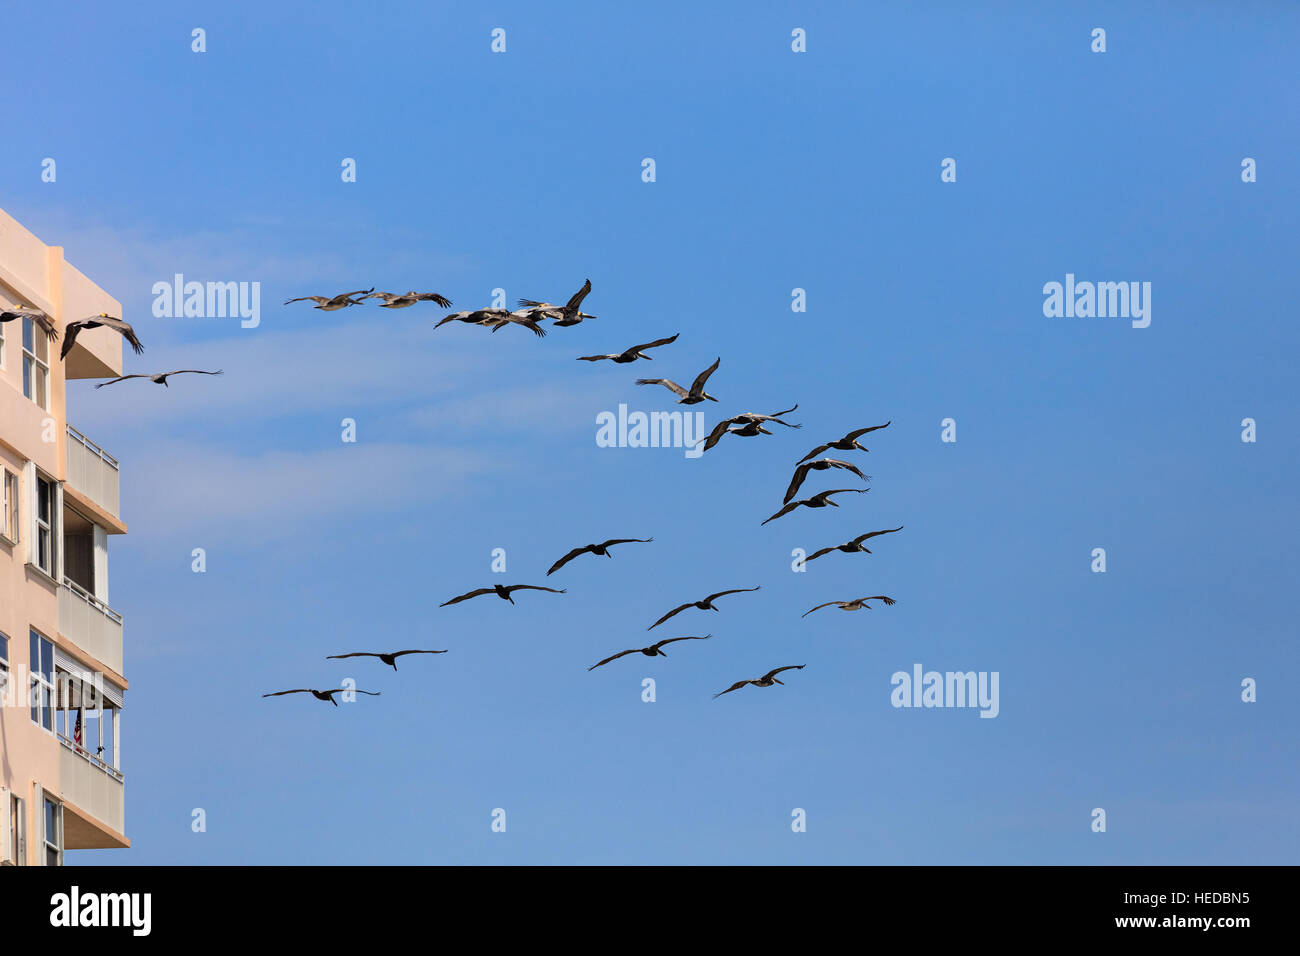 Swarm of pelicans flying around a house, Miami Beach, Florida Stock Photo